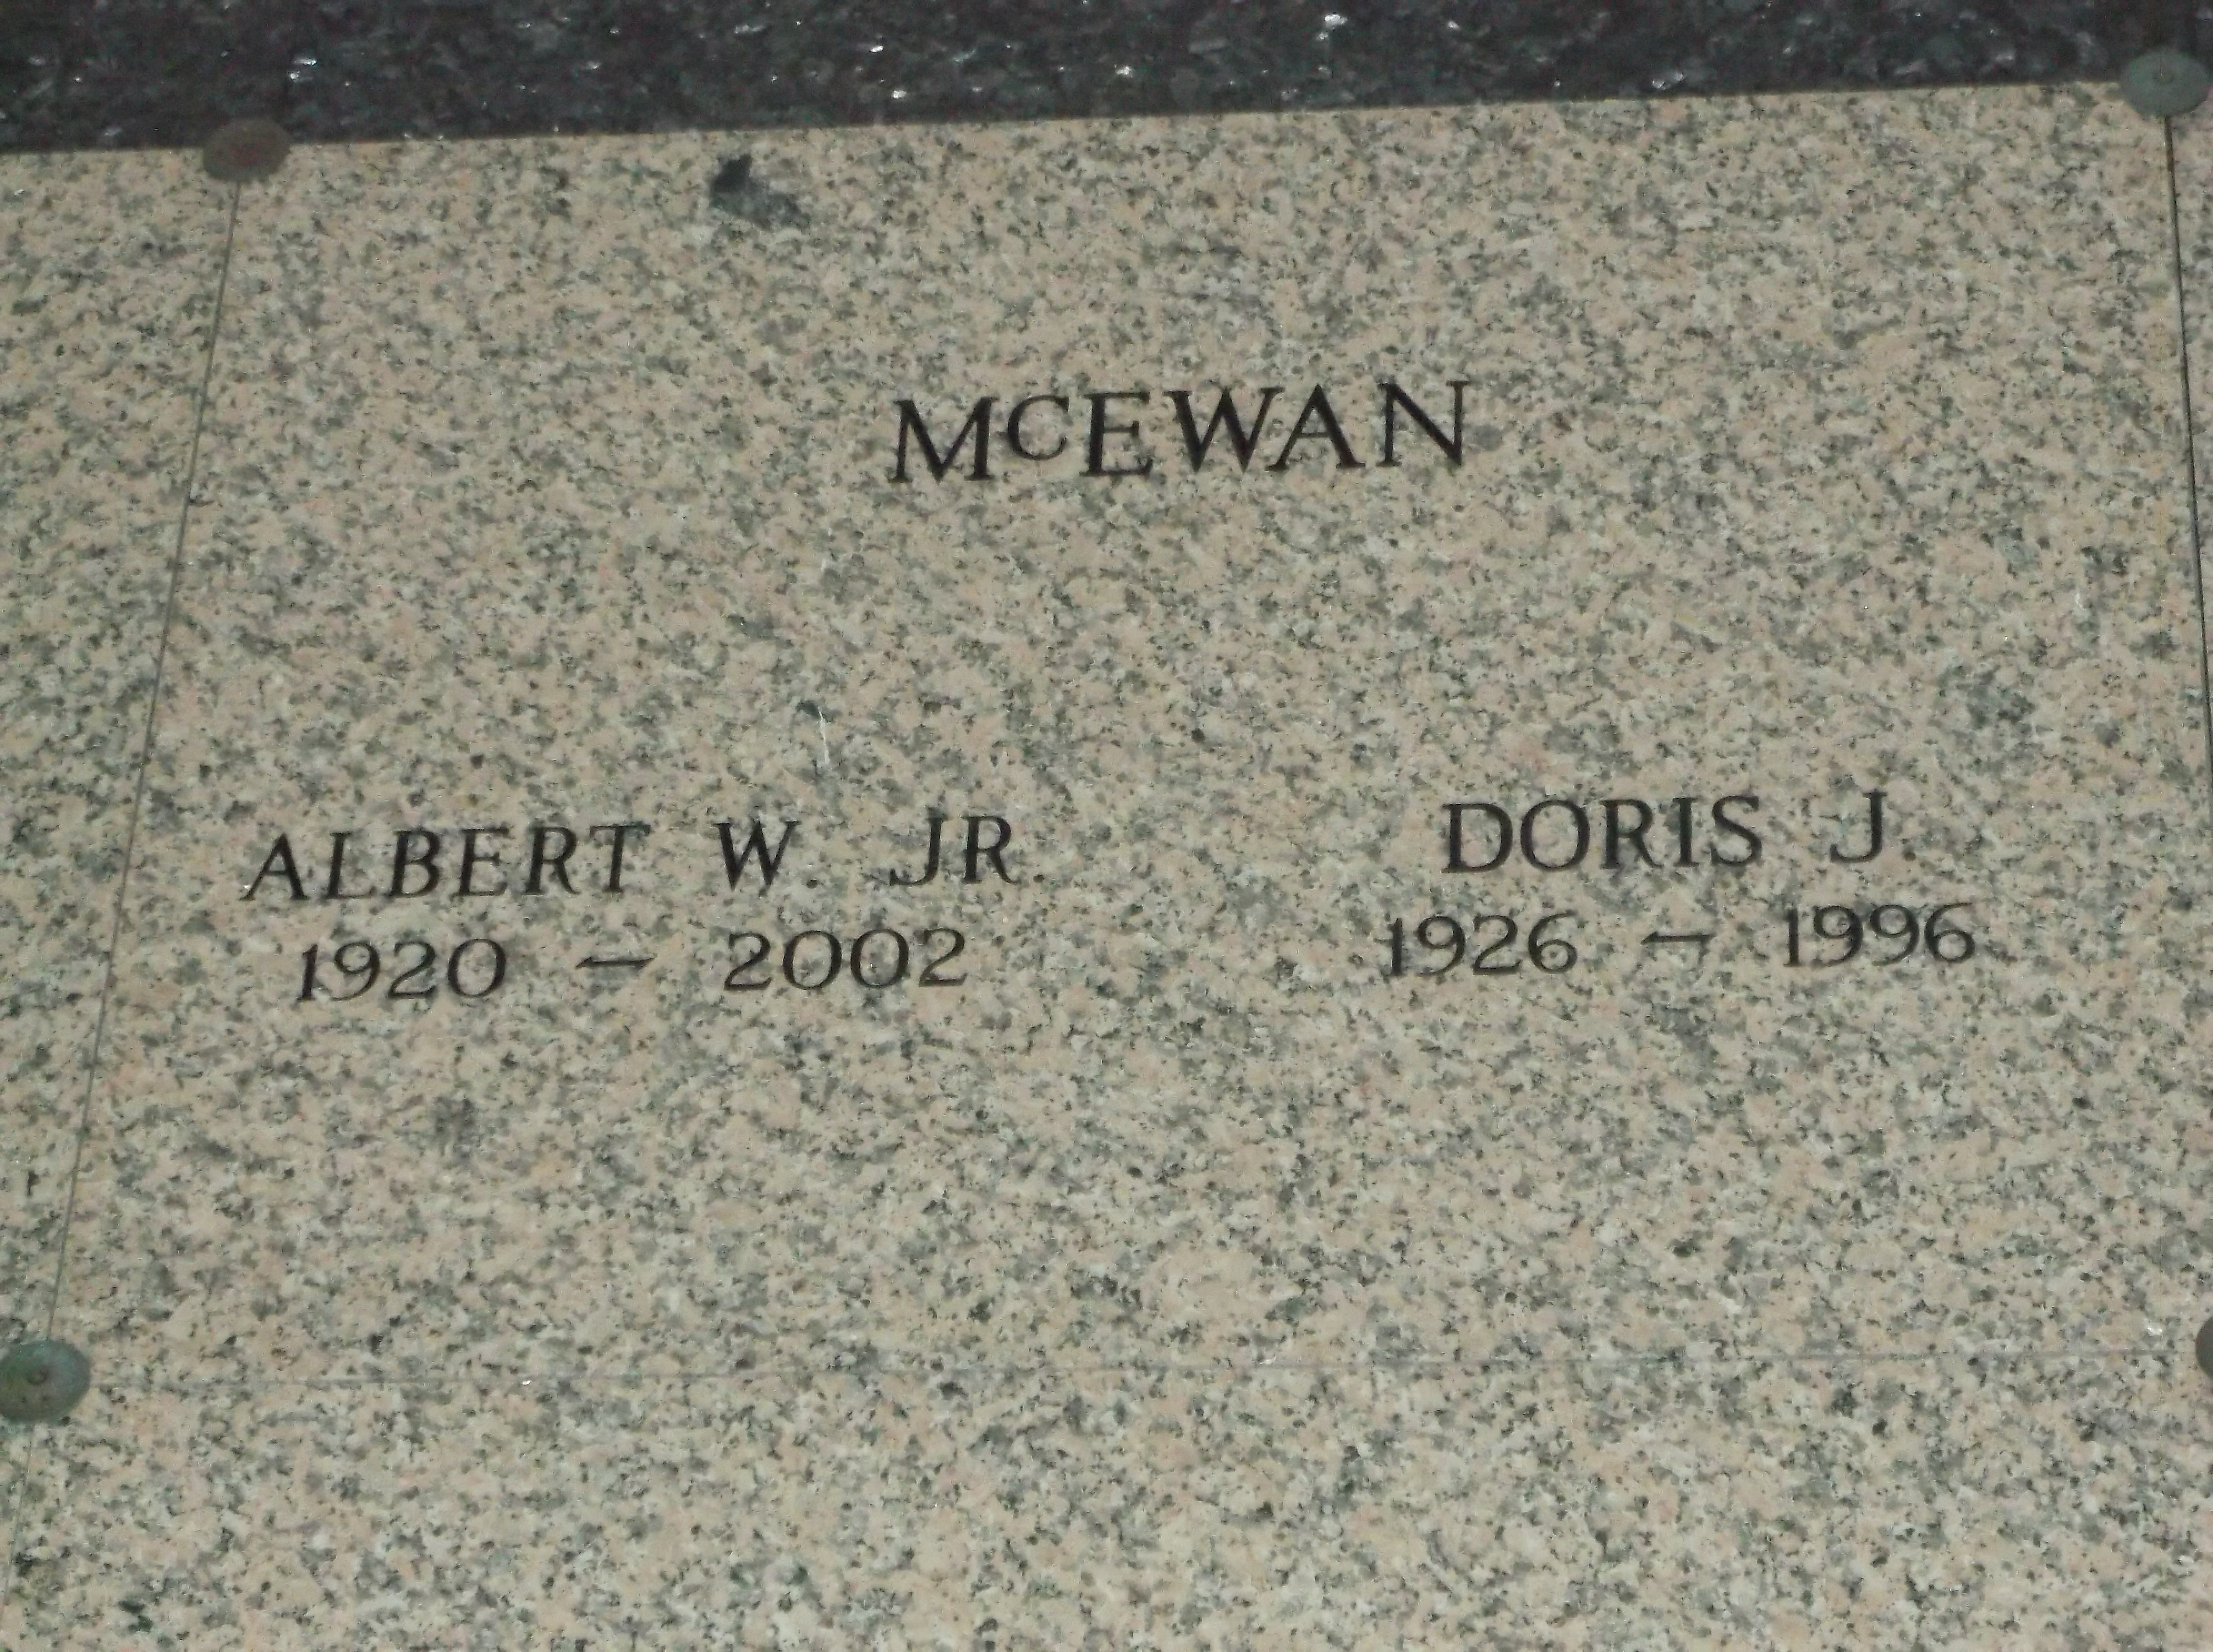 Albert W McEwan, Jr